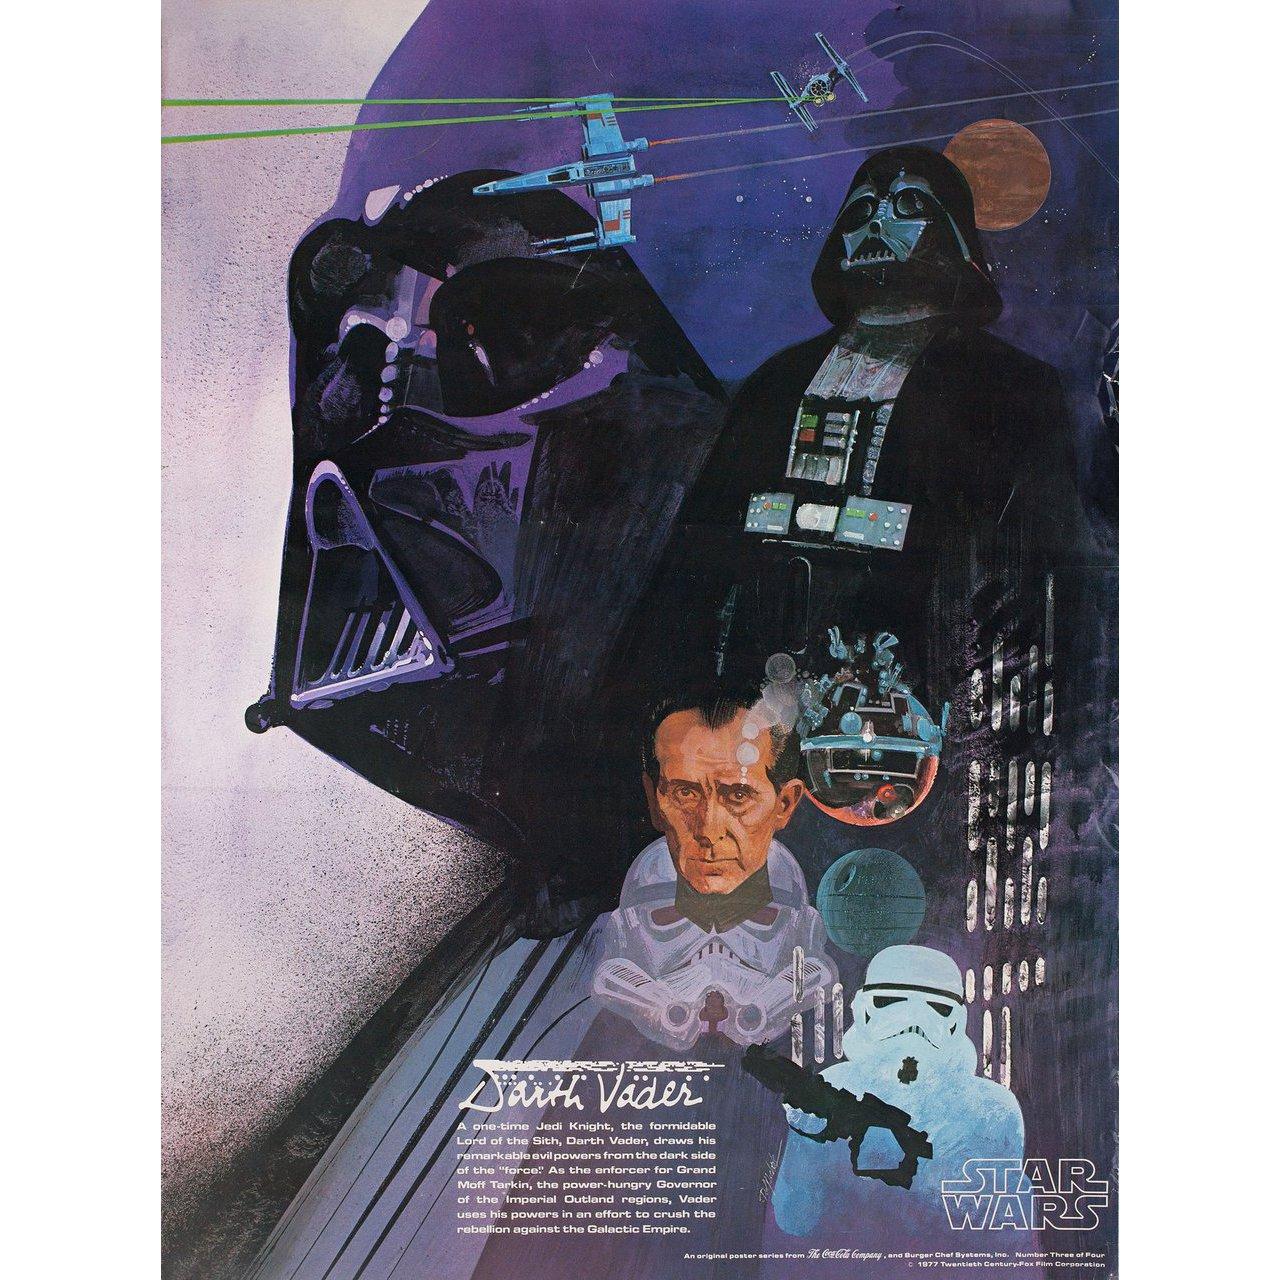 American Star Wars 1977 U.S. Film Poster